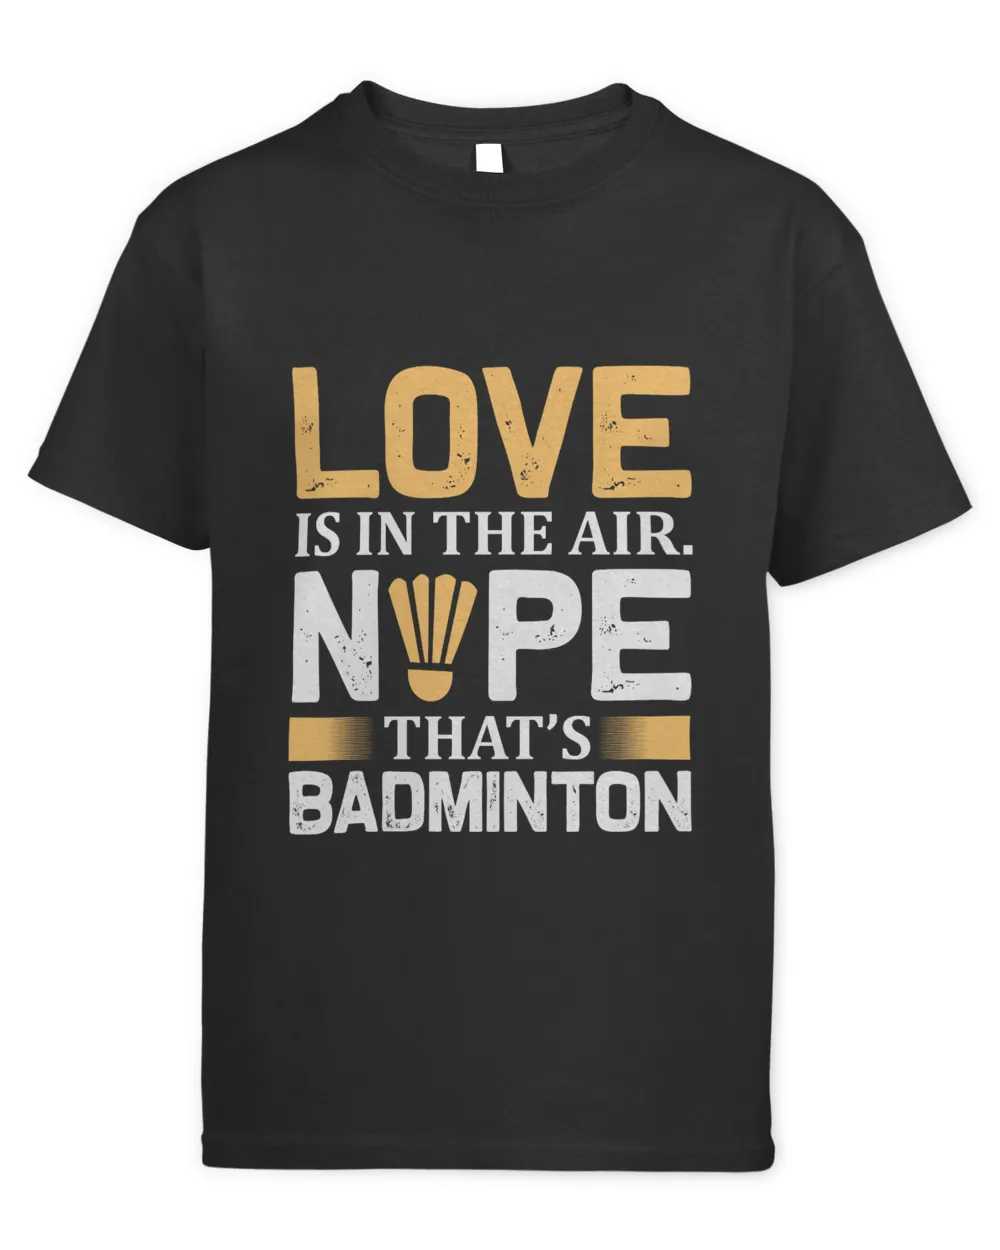 Love Shirt, Badminton Shirt,Badminton T-shirt,Funny Badminton Shirt, Badminton Gift,Sport Shirt